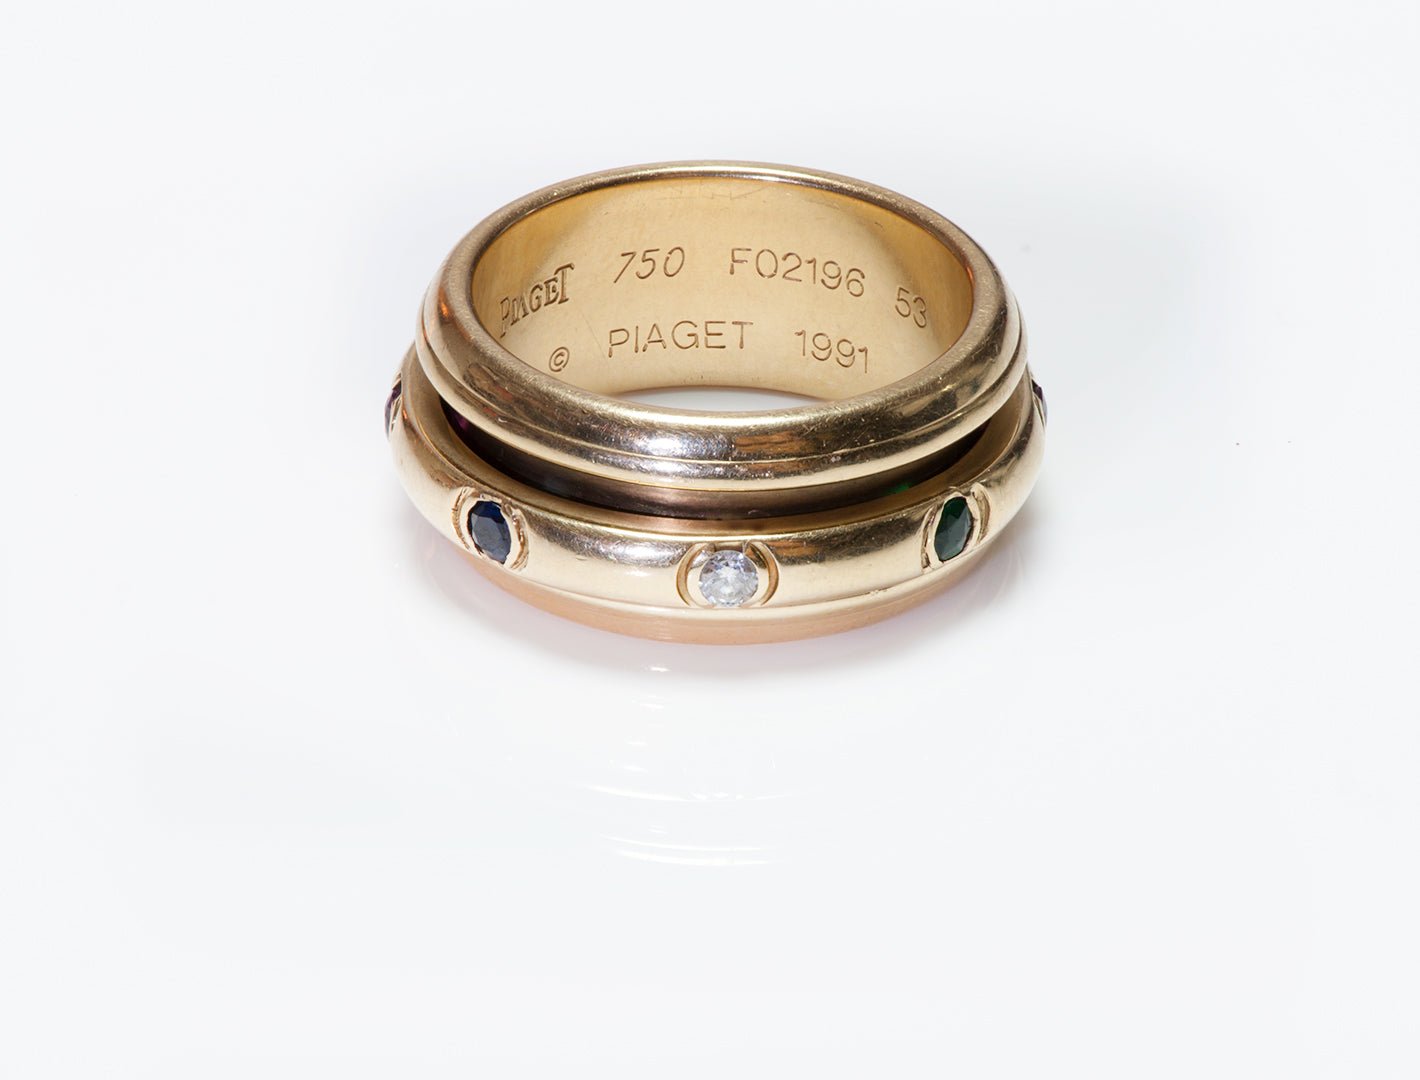 Piaget Possession Diamond Emerald Sapphire & Ruby 18K Gold Band Ring